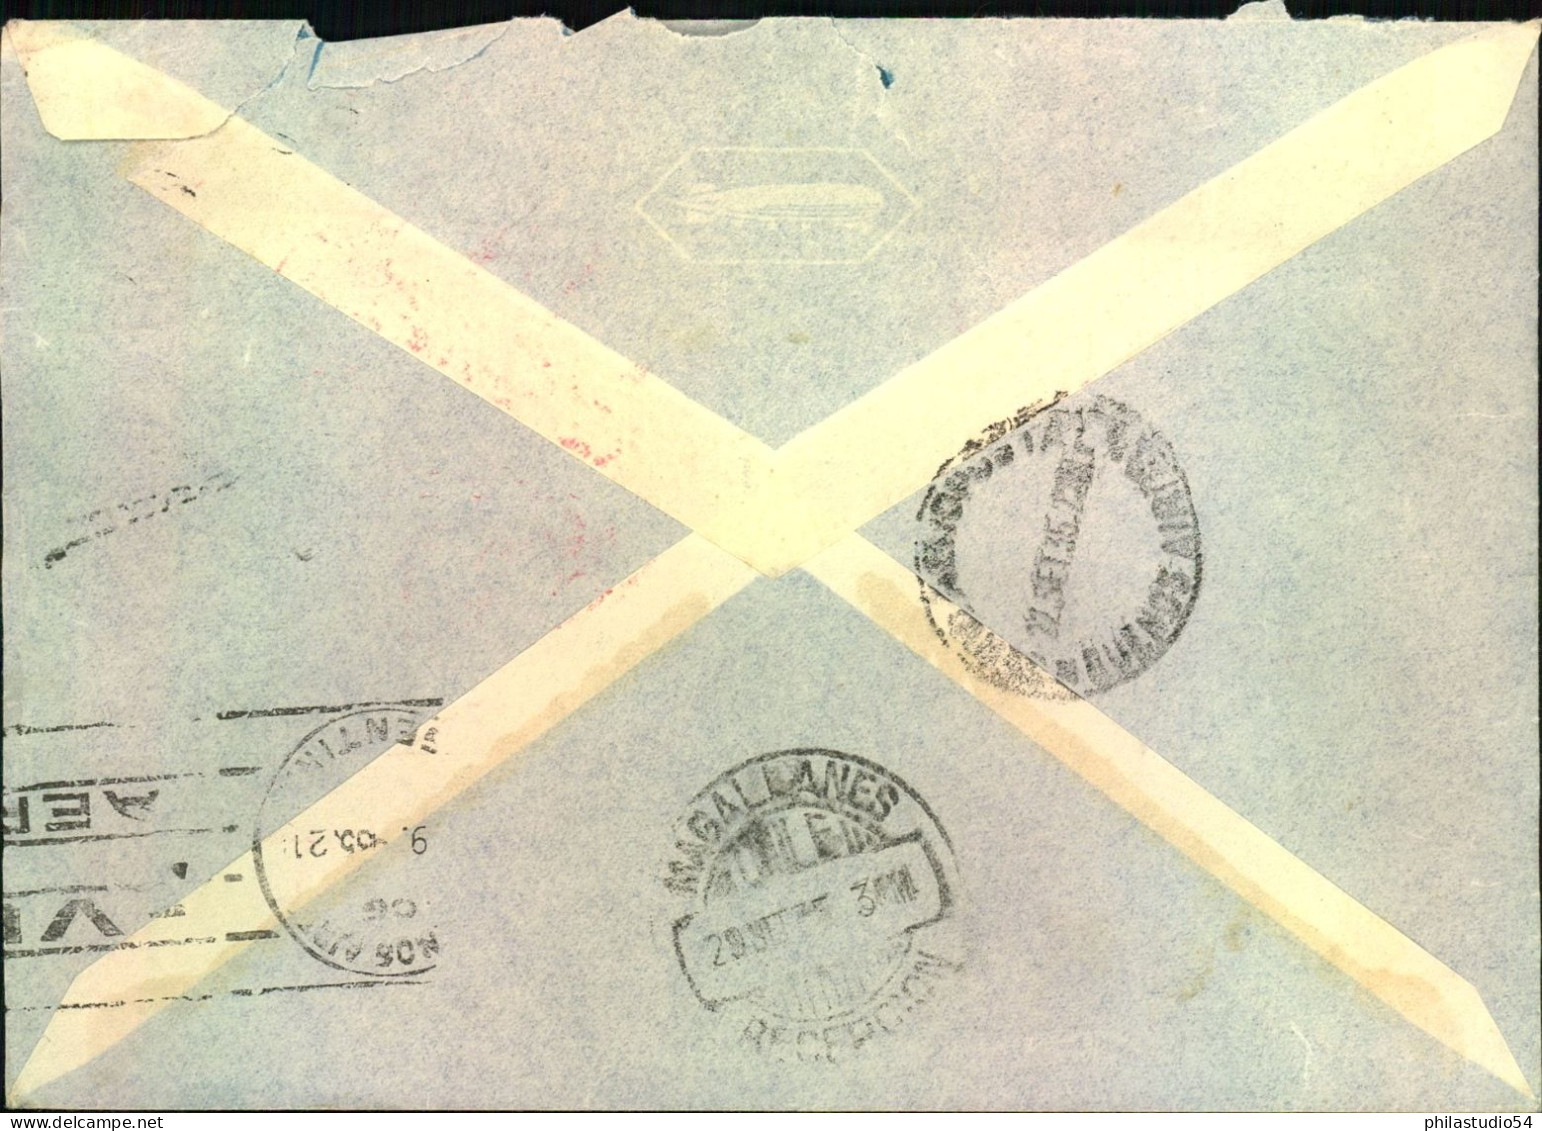 1935, Bunt Frankierter Luftpostbrief Ab TROSSINGEN Nach Magallanes, Chile - Private Postal Stationery